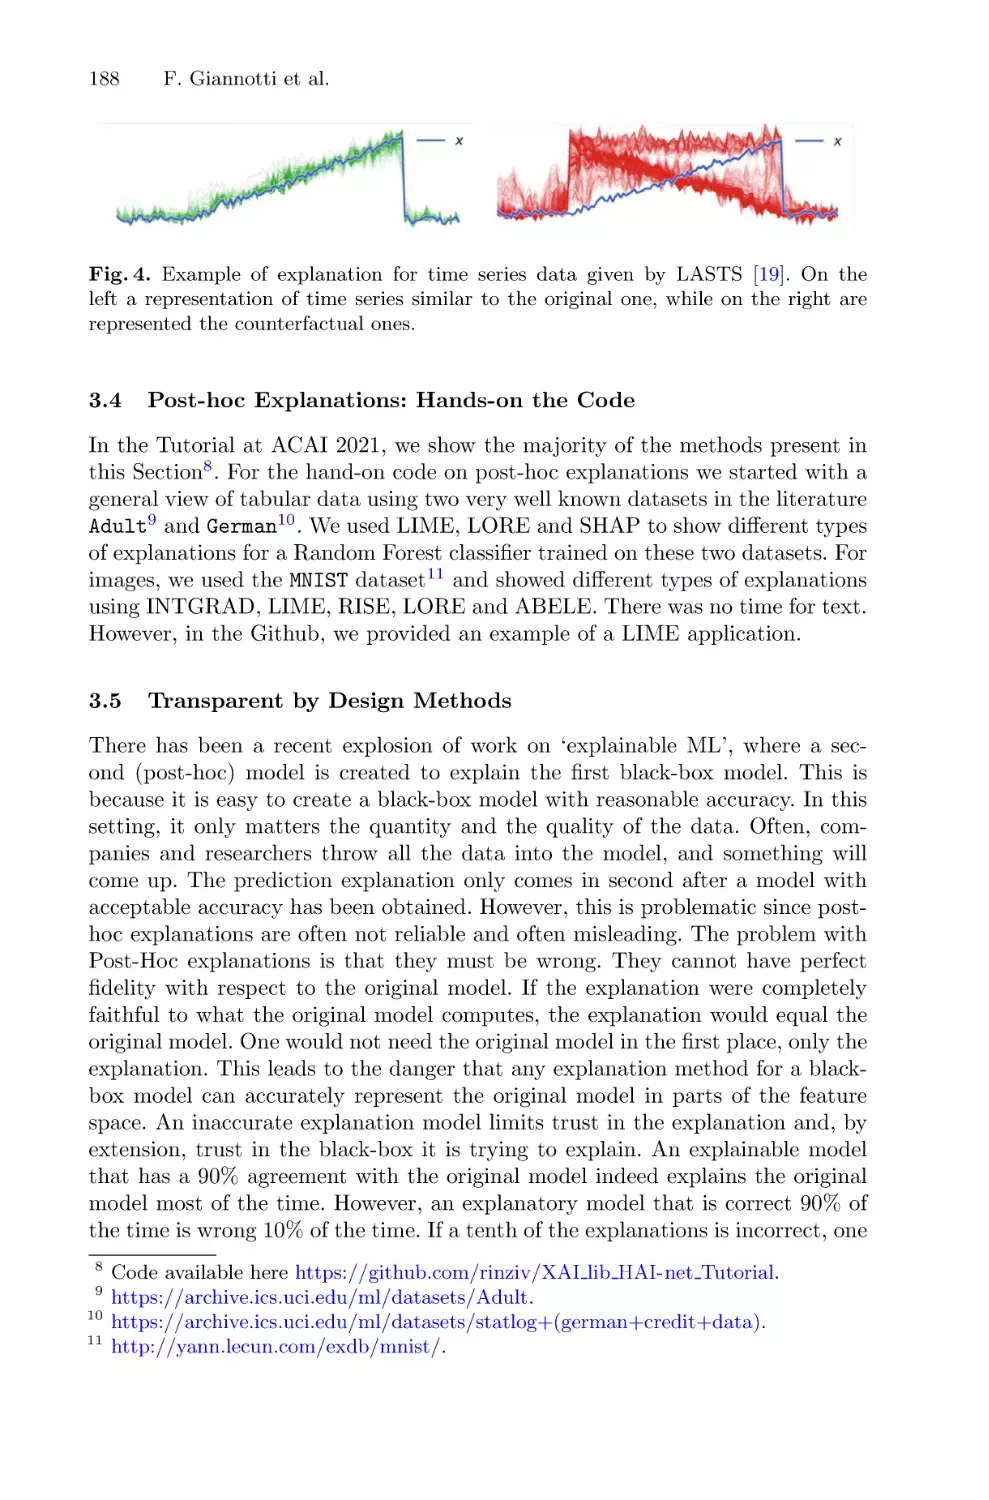 3.4 Post-hoc Explanations
3.5 Transparent by Design Methods